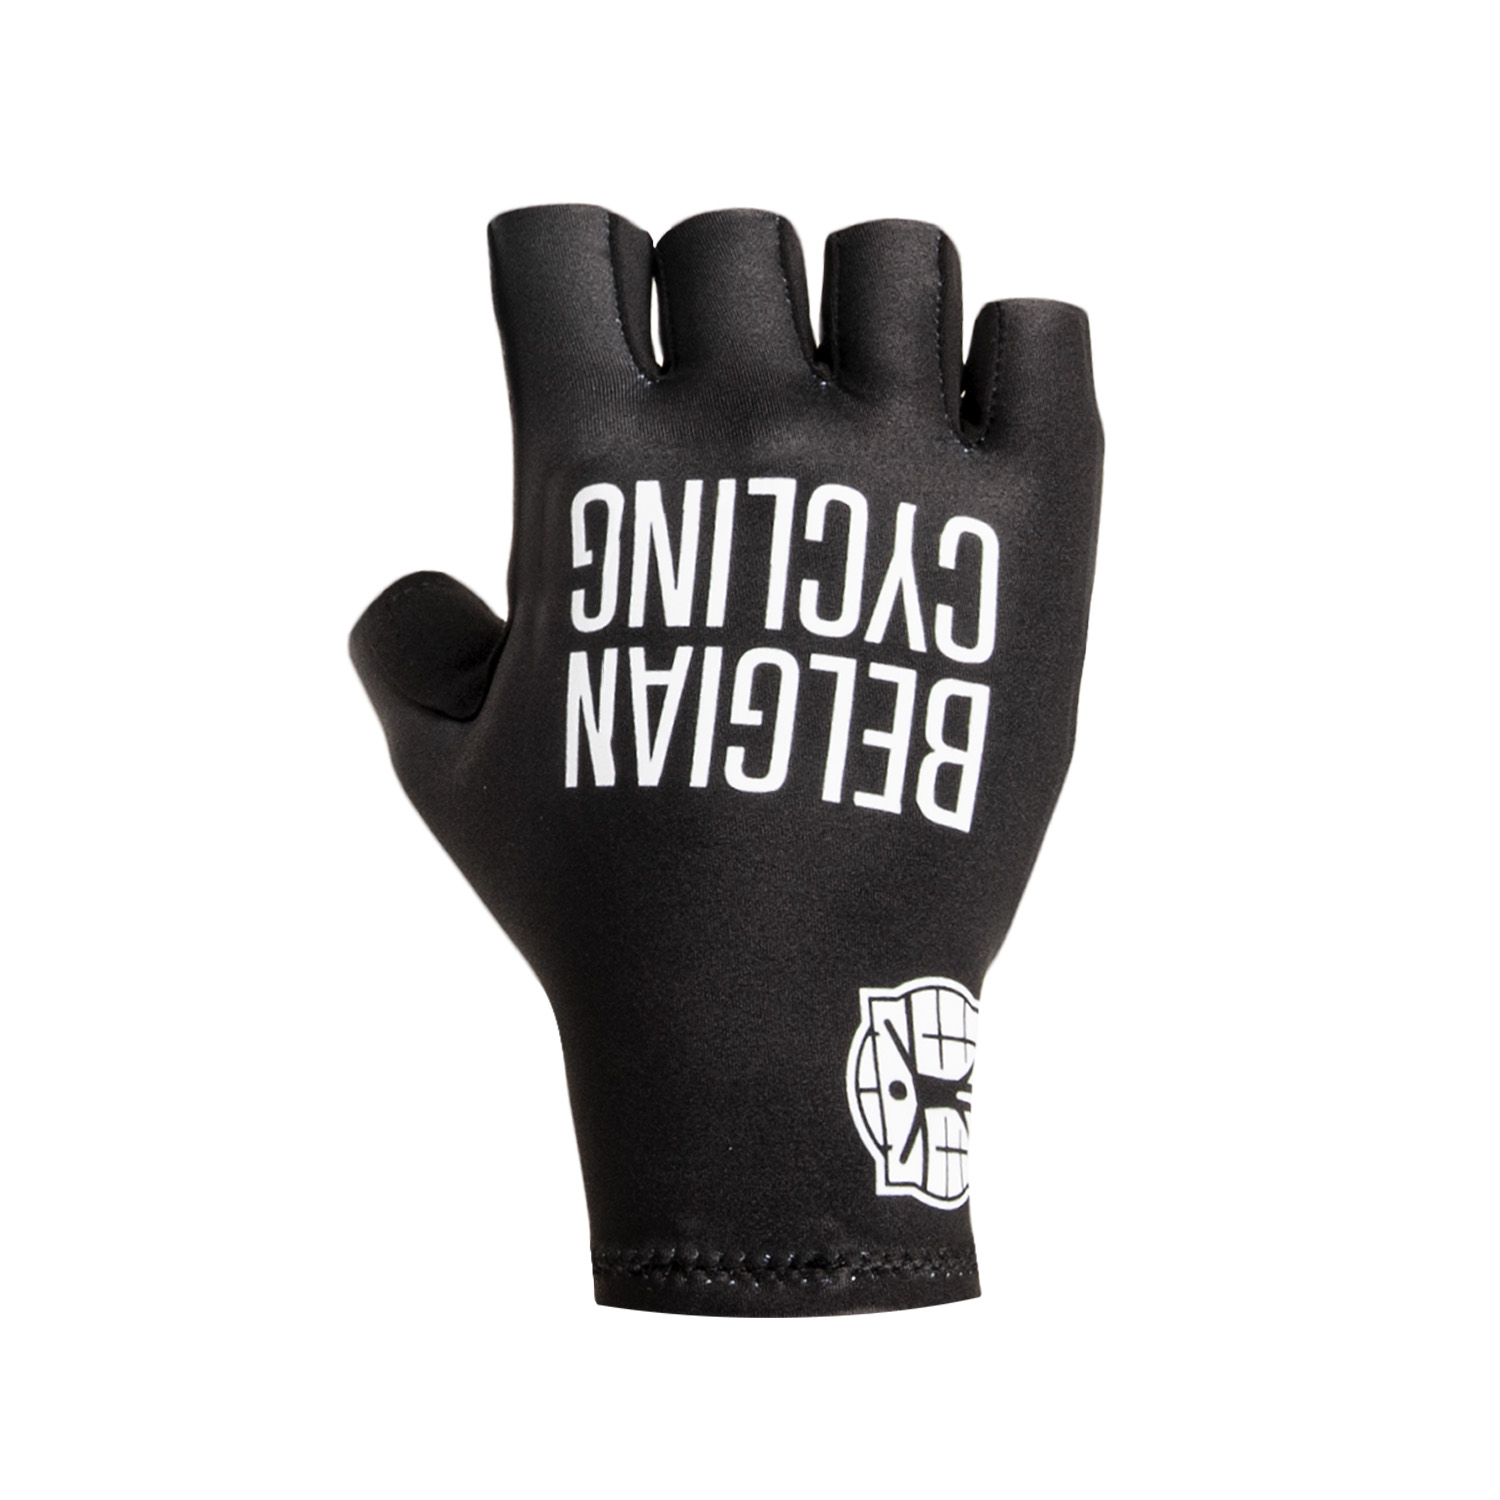 official team belgium gloves